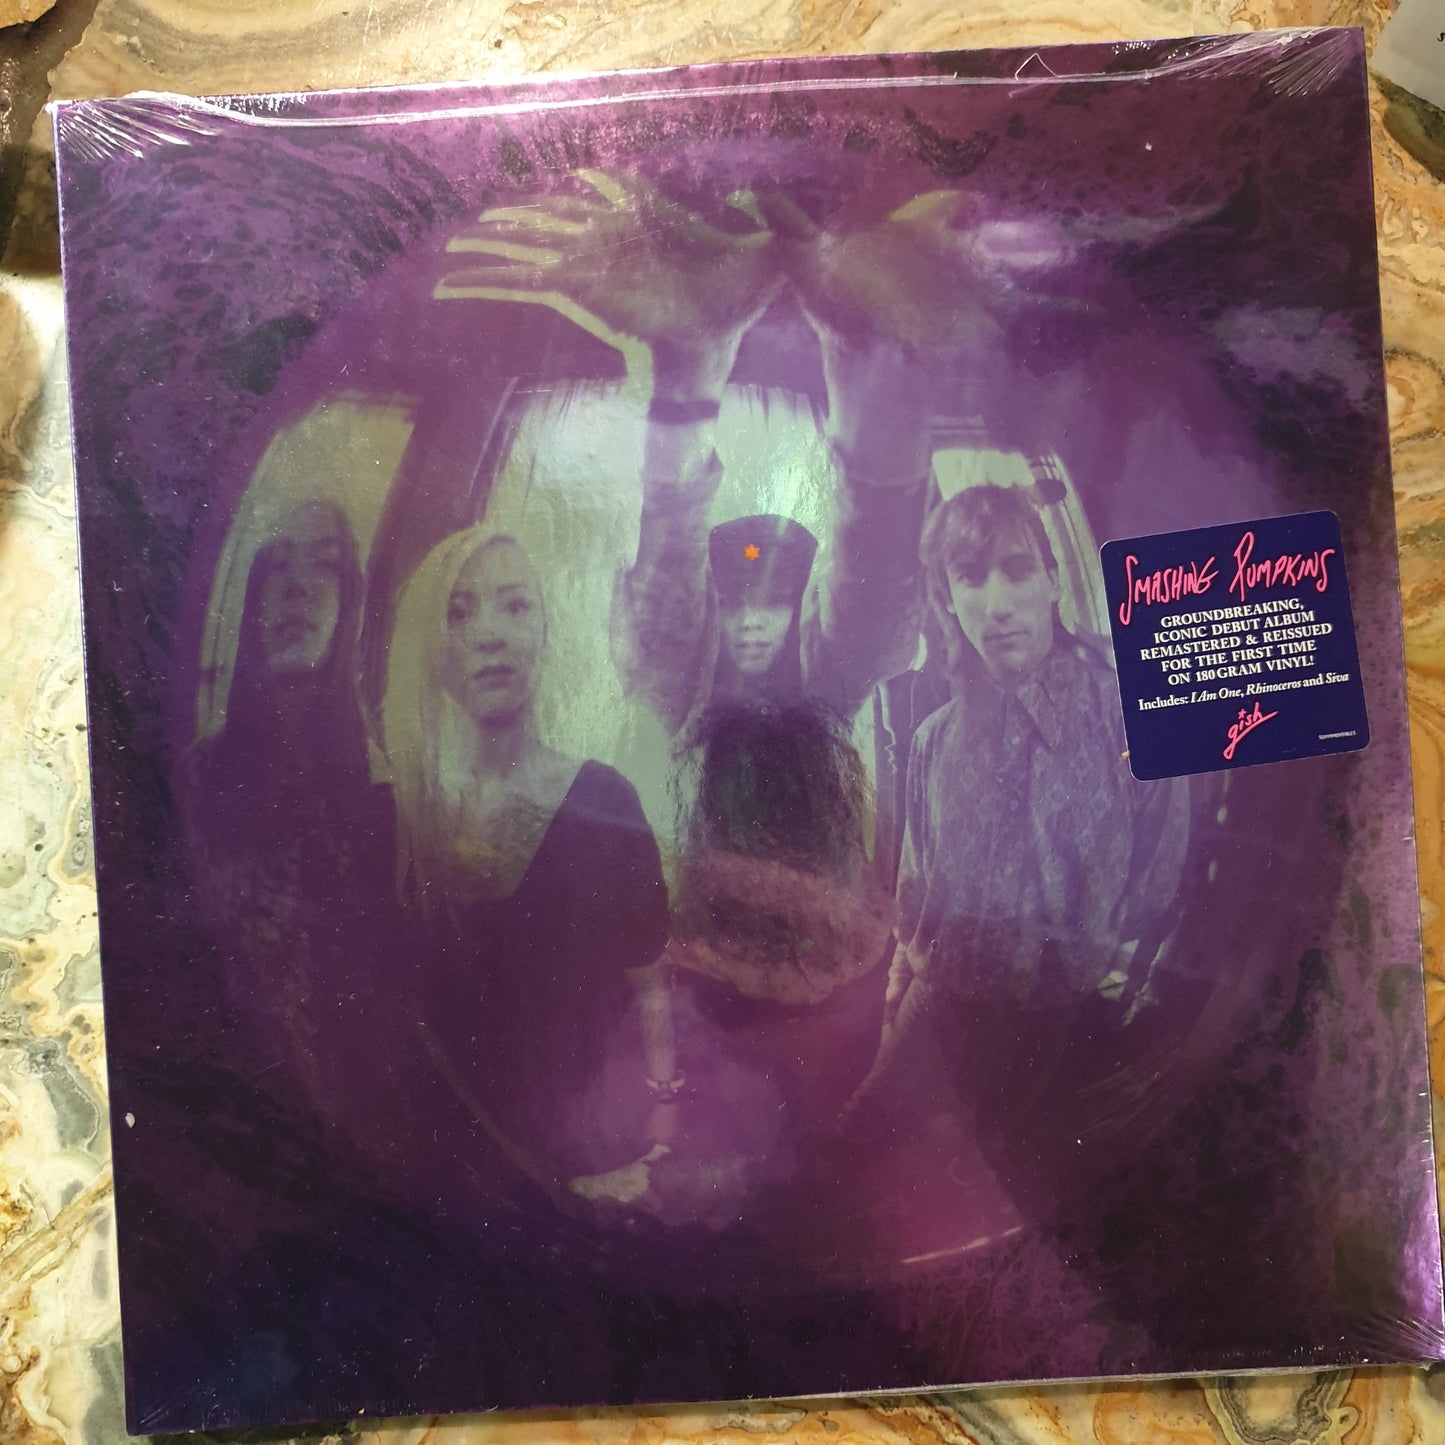 NEW - Smashing Pumpkins (The), Gish 180gm LP Vinyl